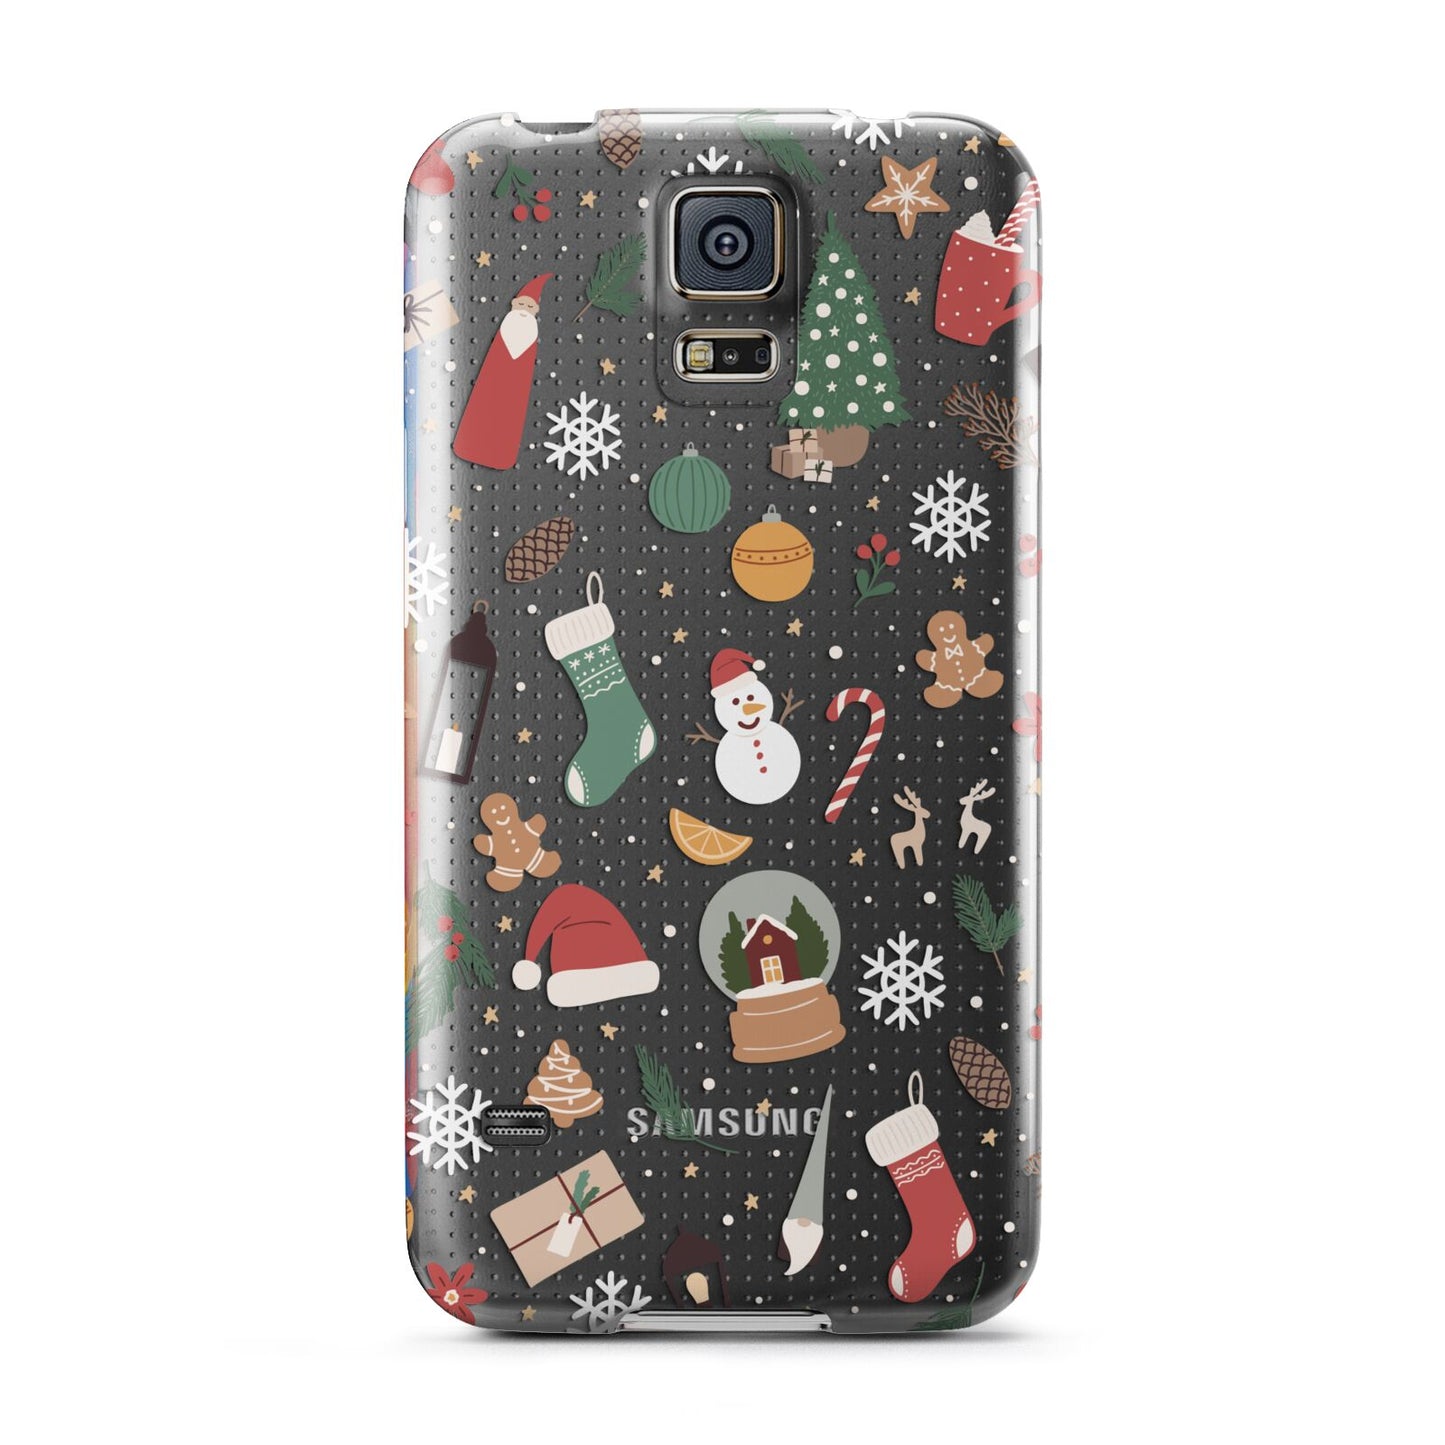 Christmas Assortments Samsung Galaxy S5 Case